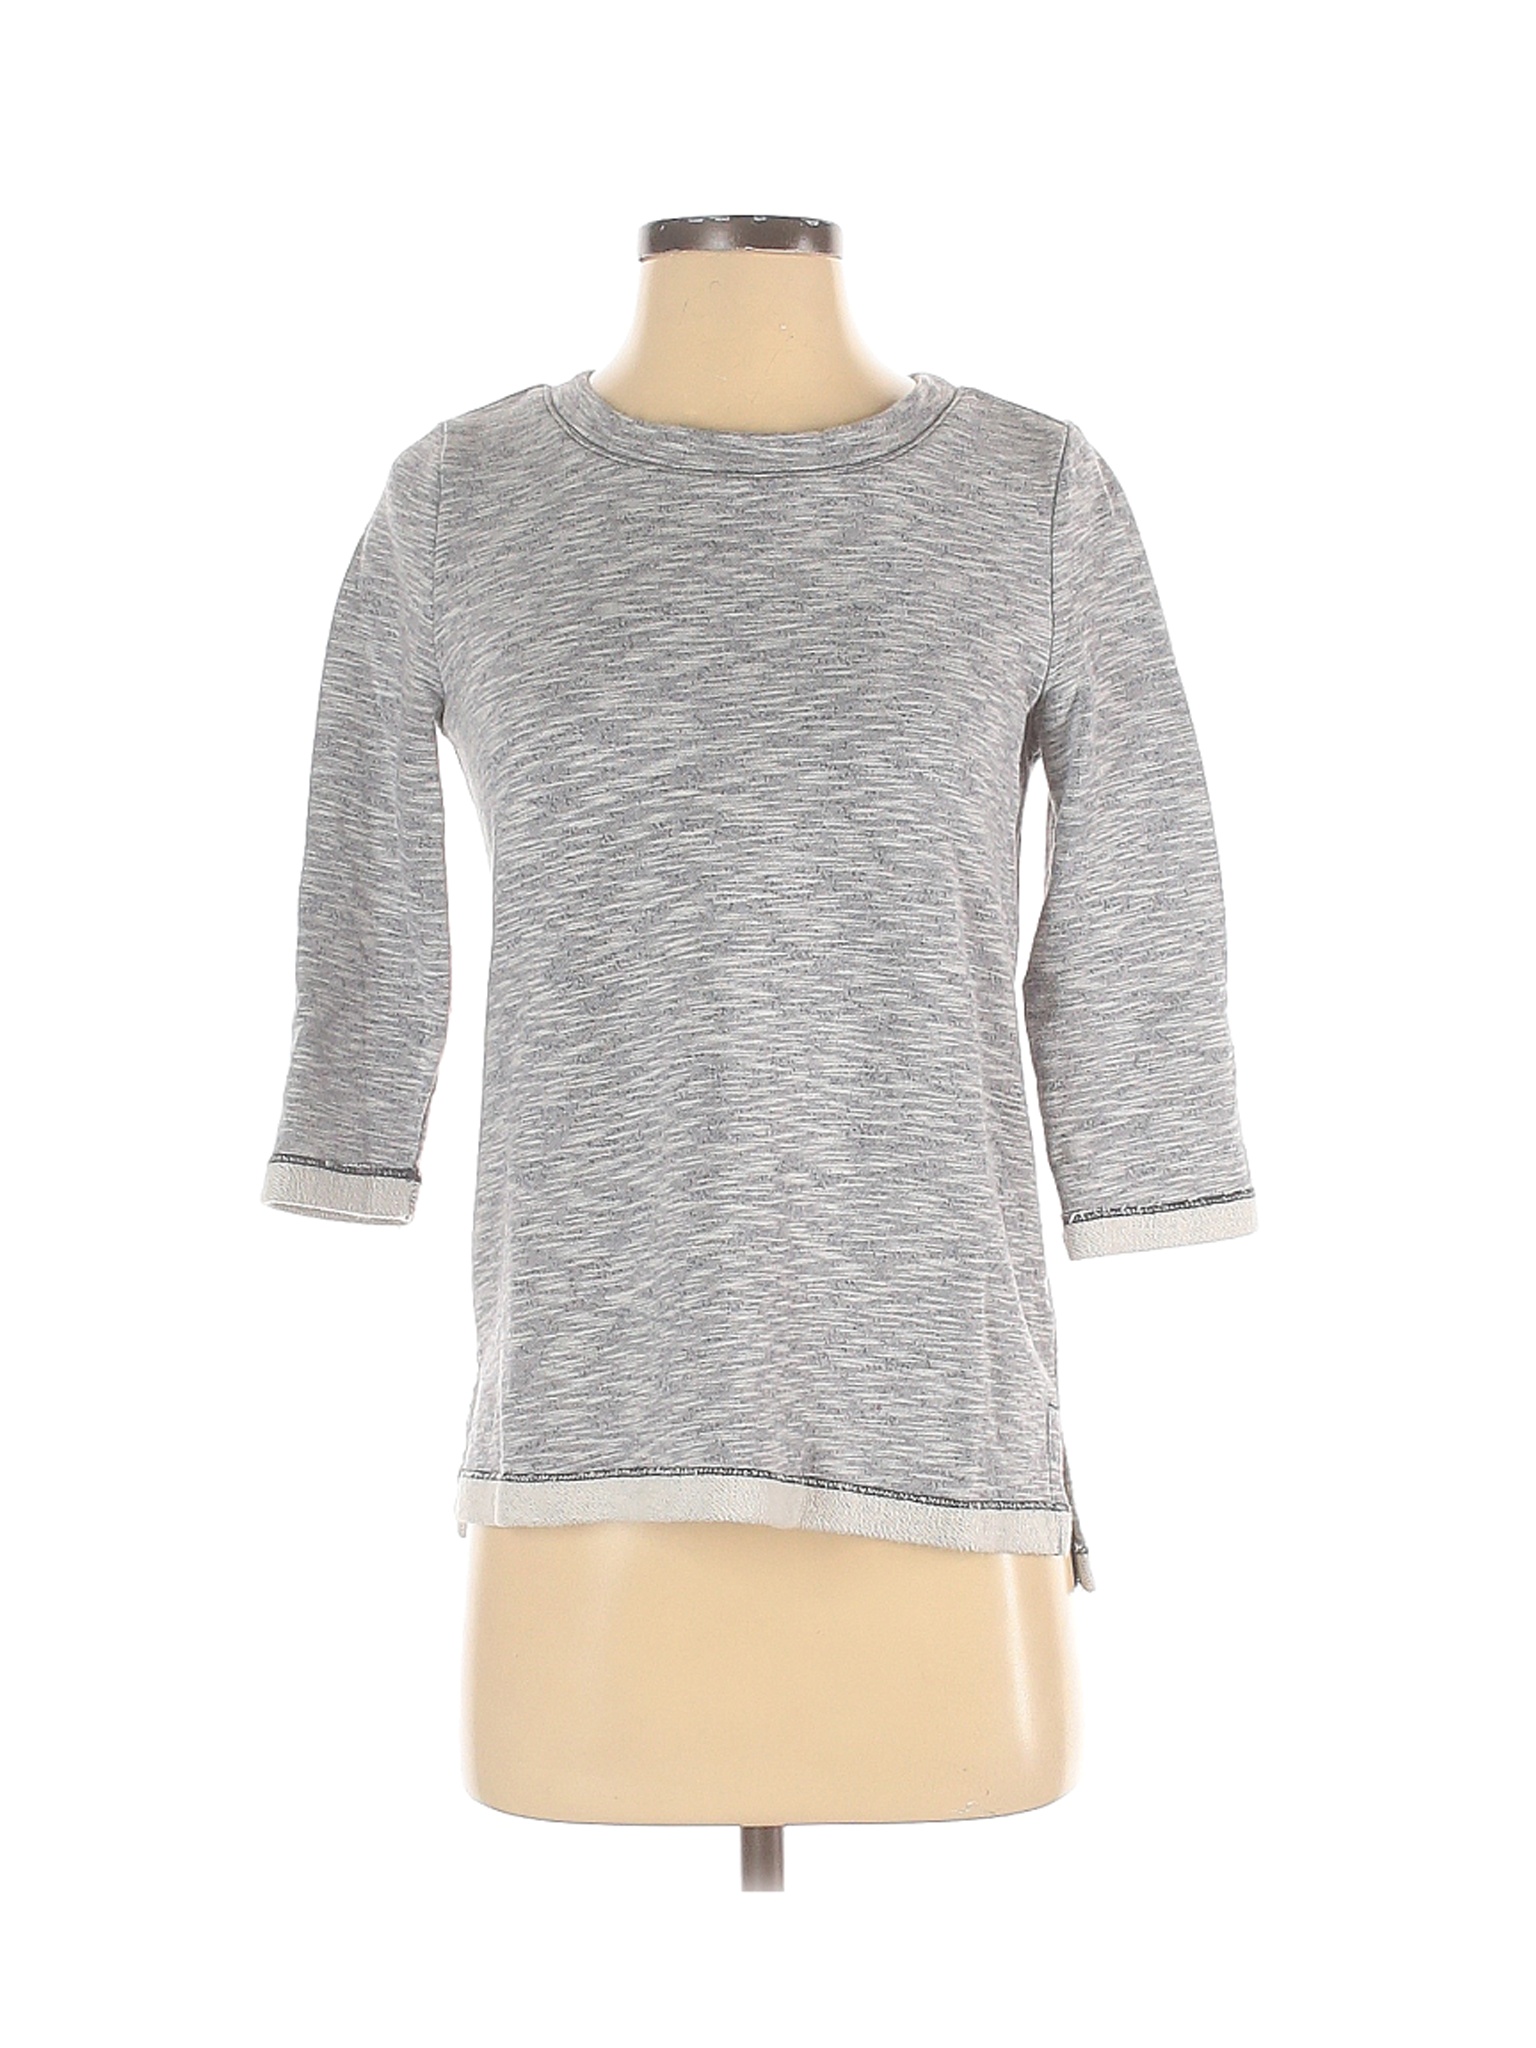 Gap Women Gray Sweatshirt XS | eBay